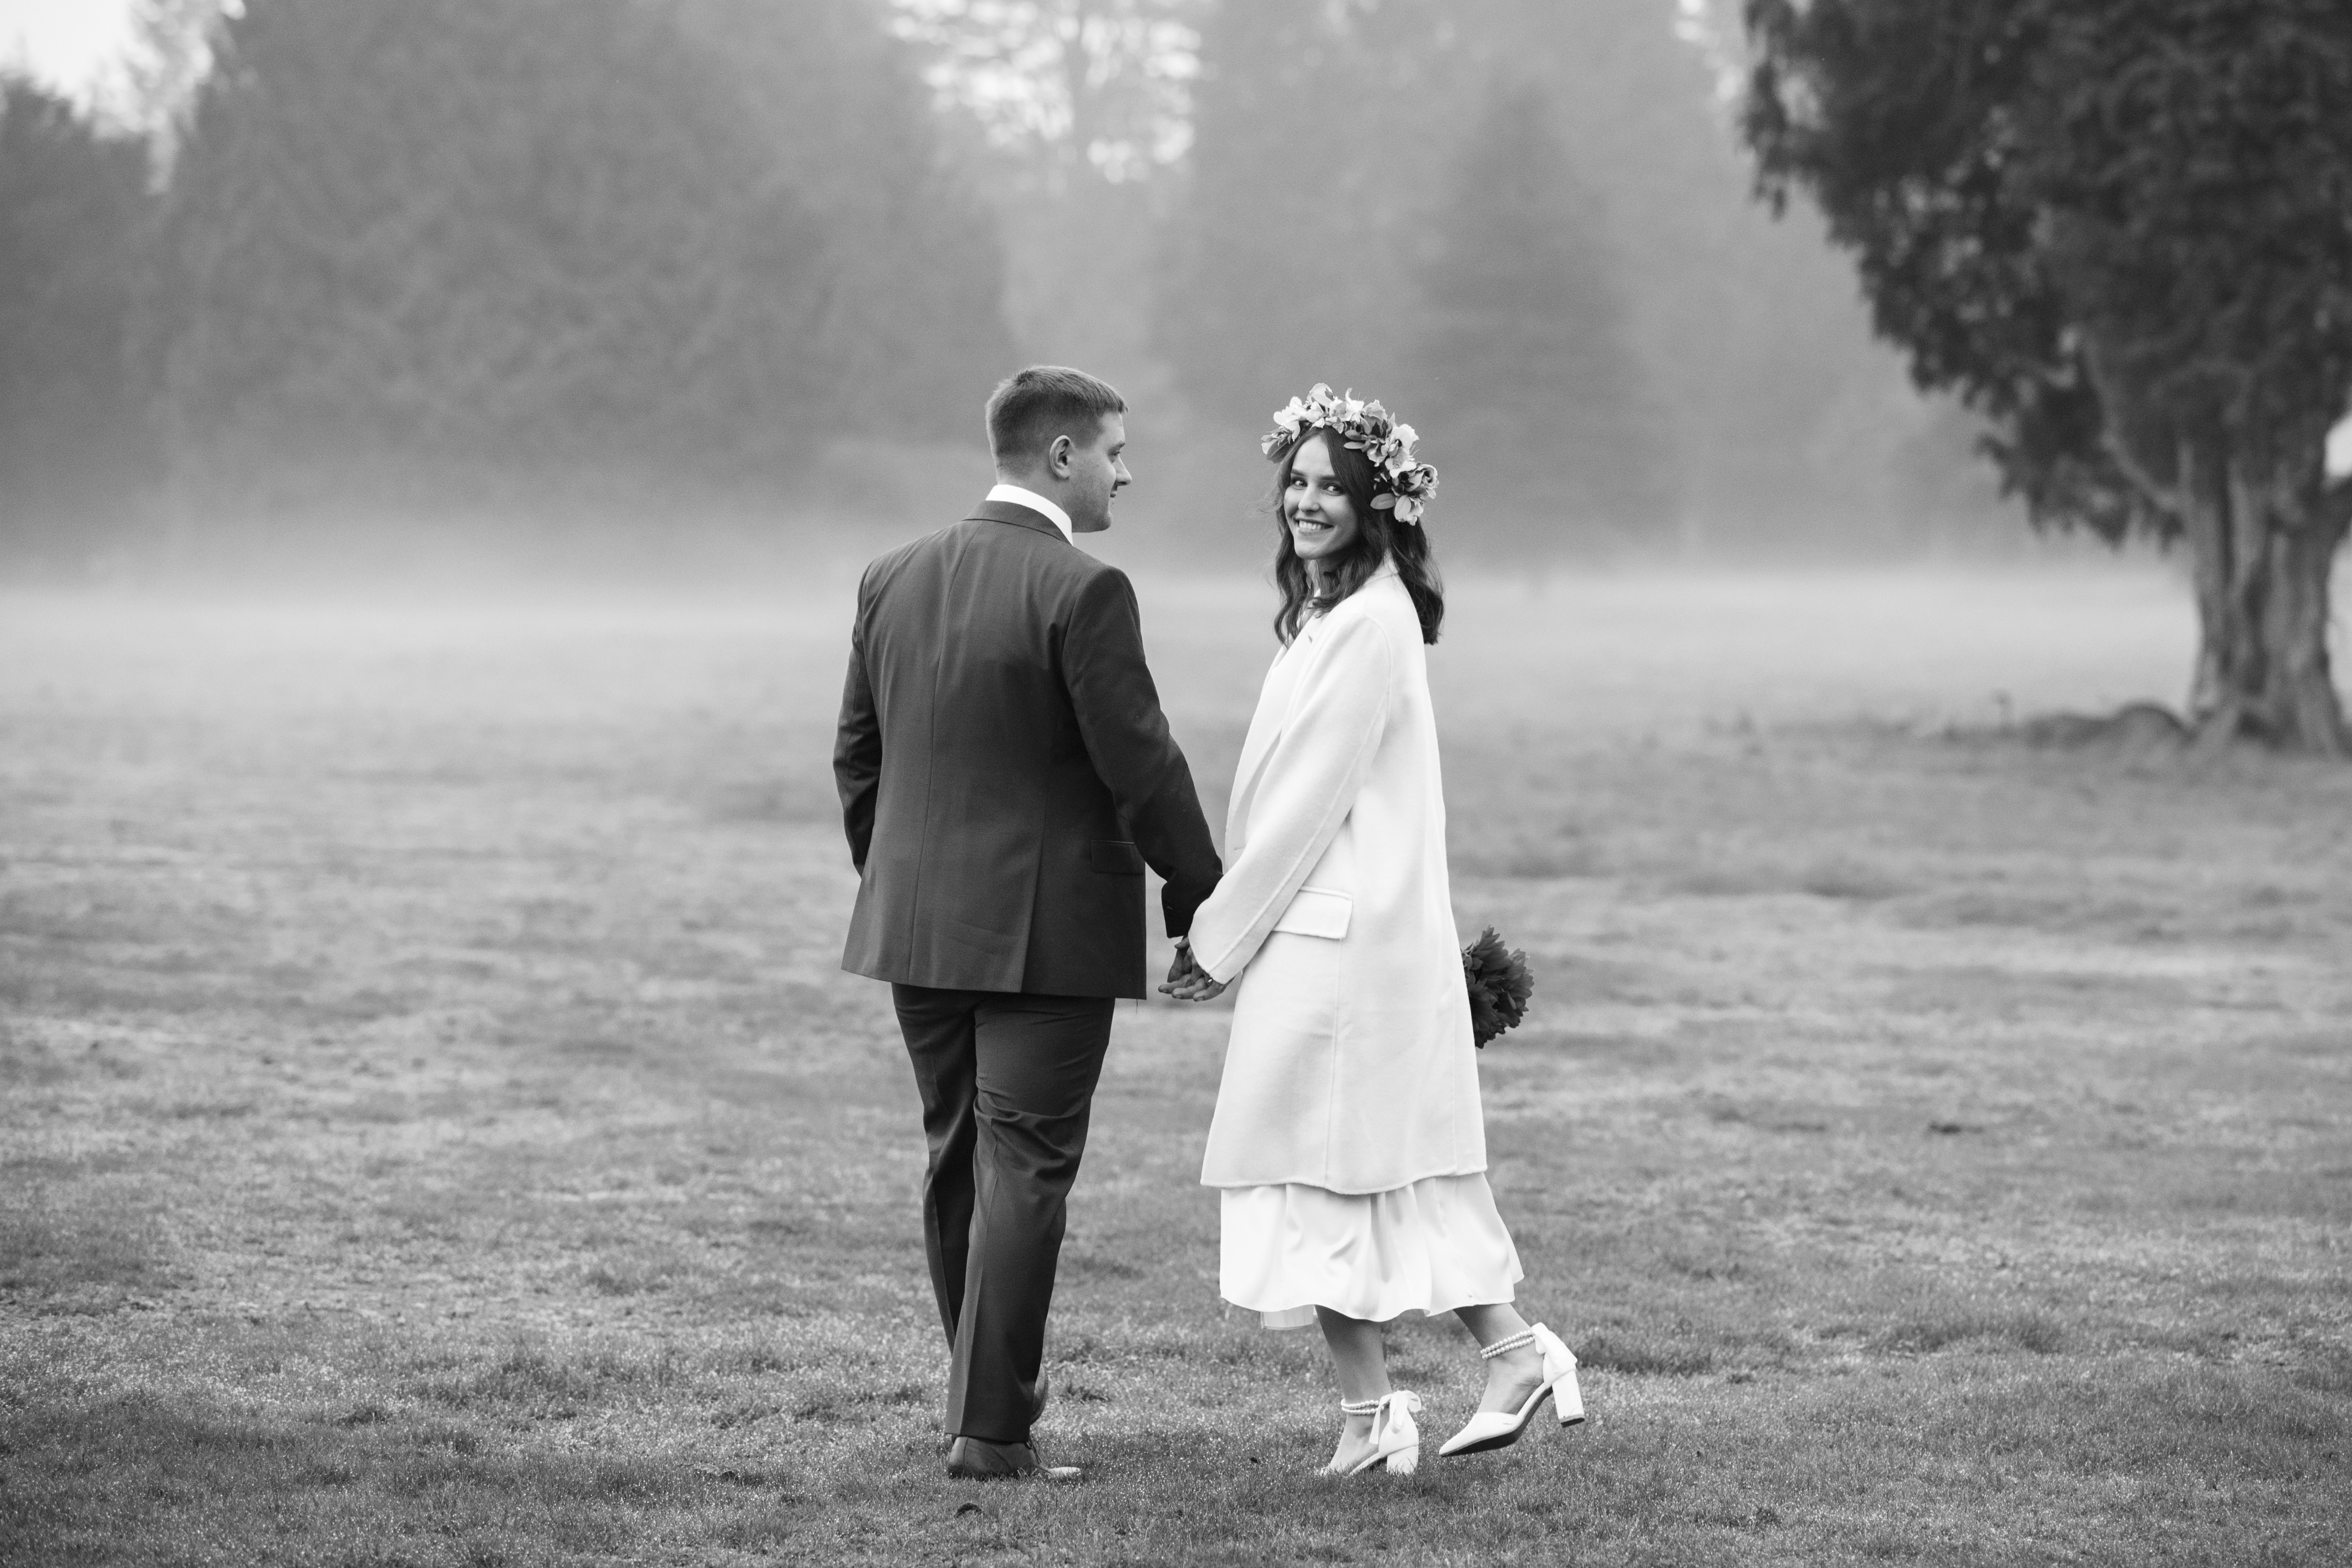 Mariia Bilyk and Vitalij Melynik got married at Hedsor House in November with the help of Bridebook.com